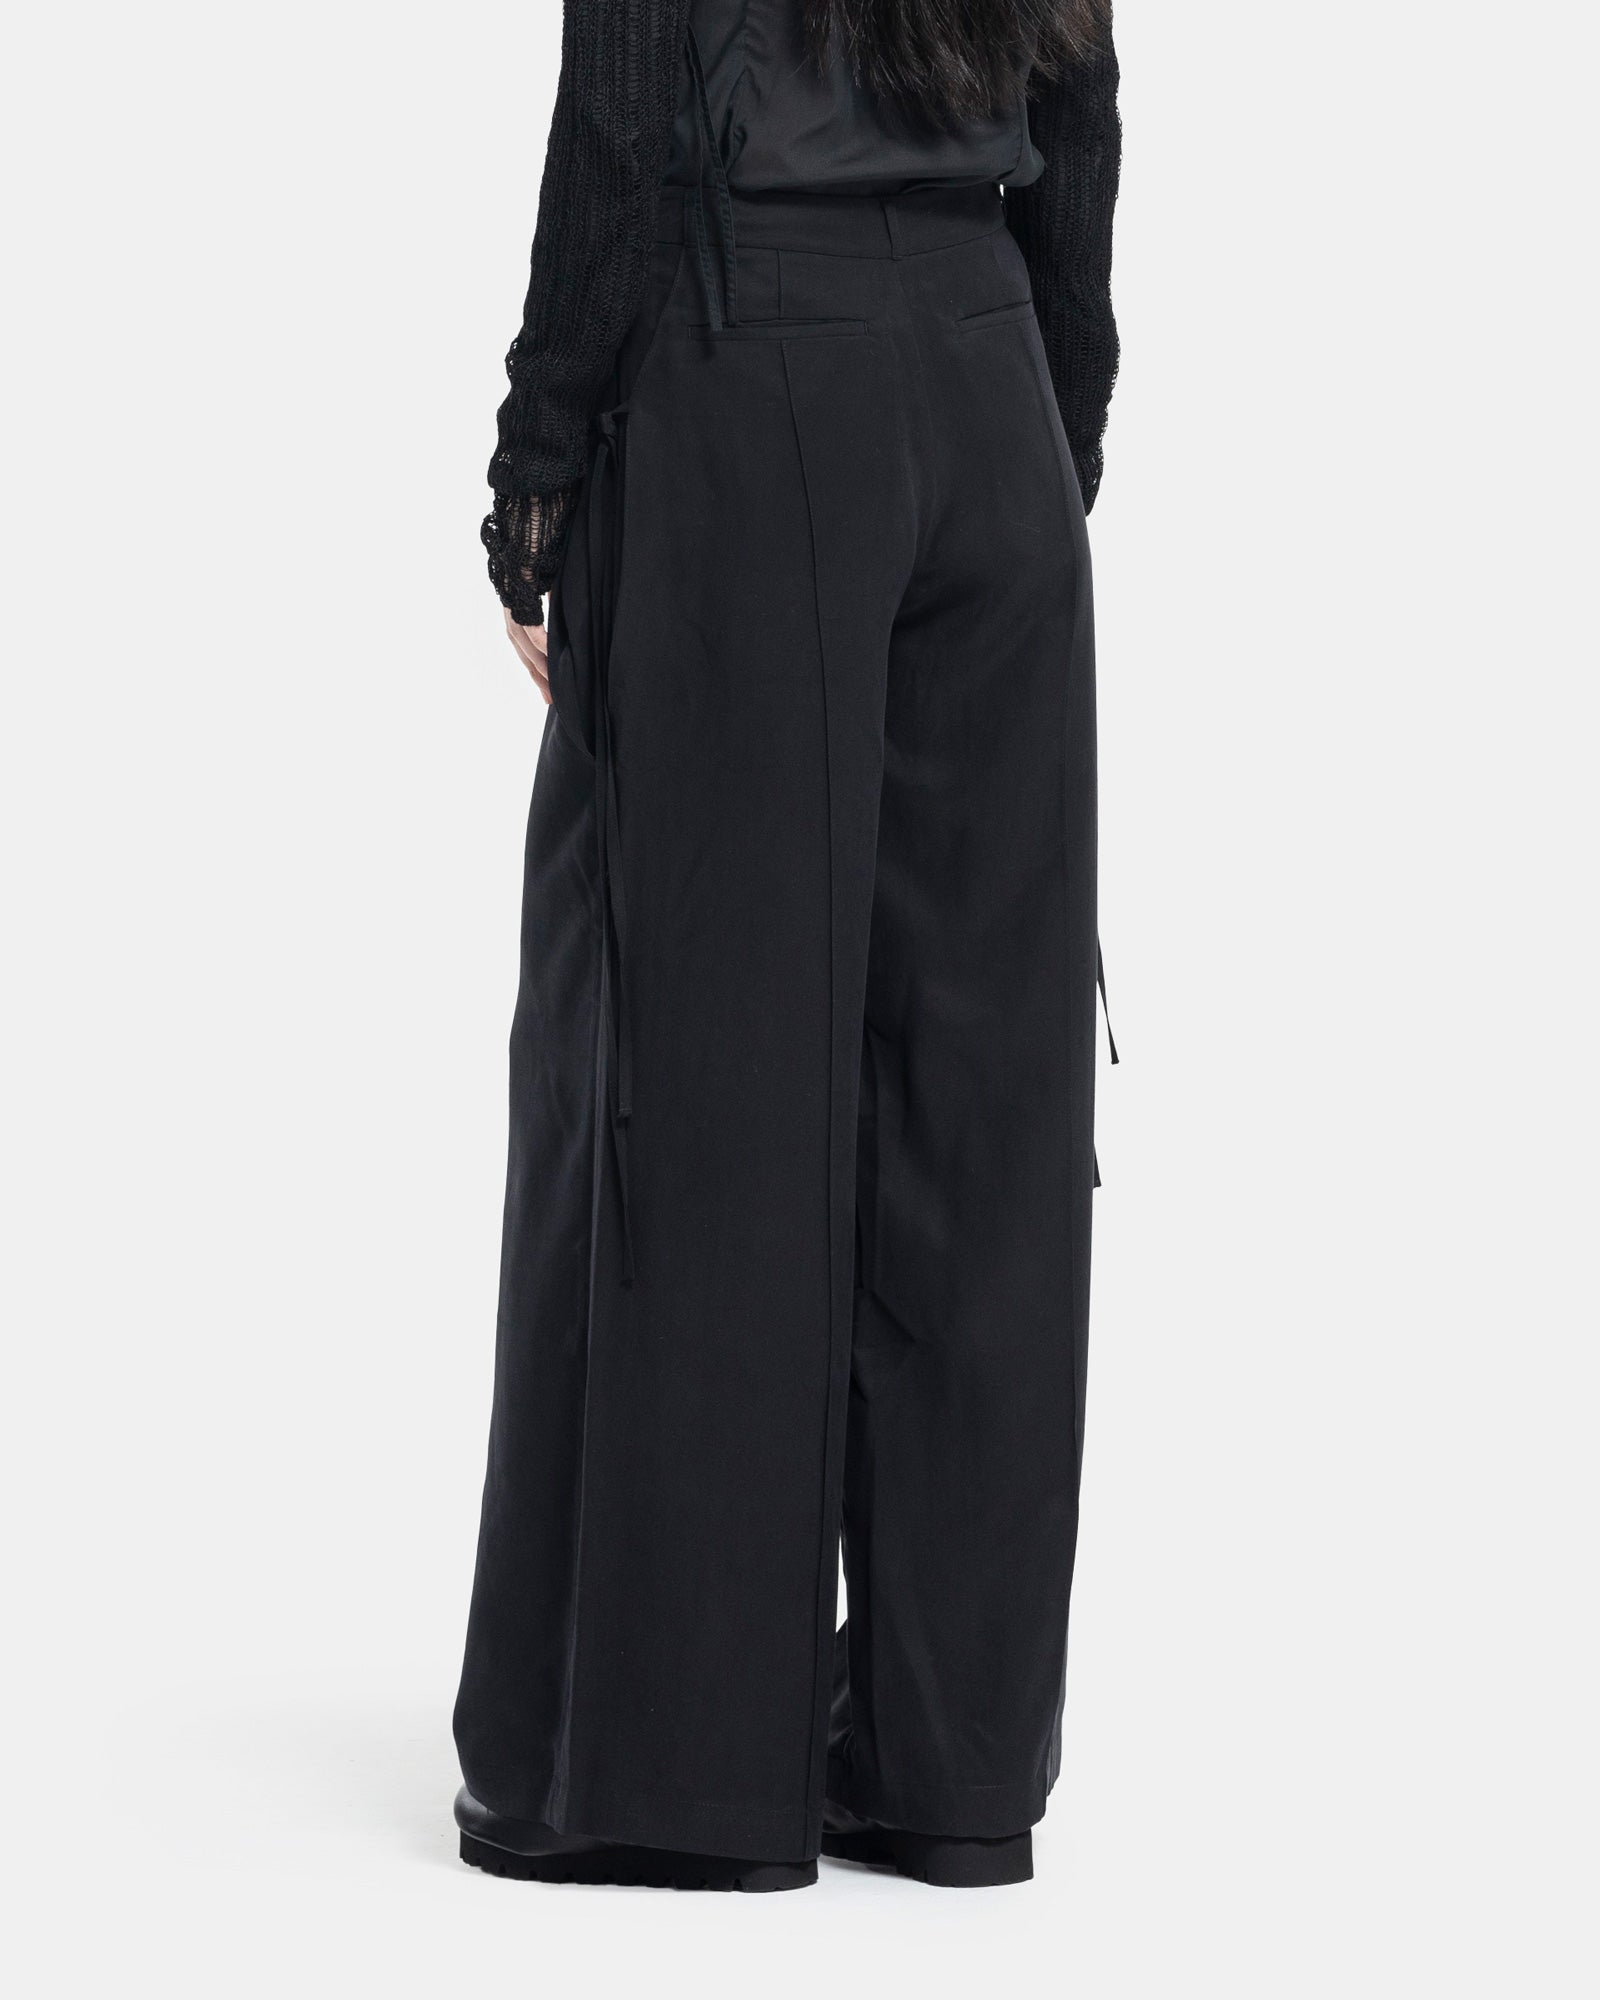 Female model wearing Professor.E black trousers on white background